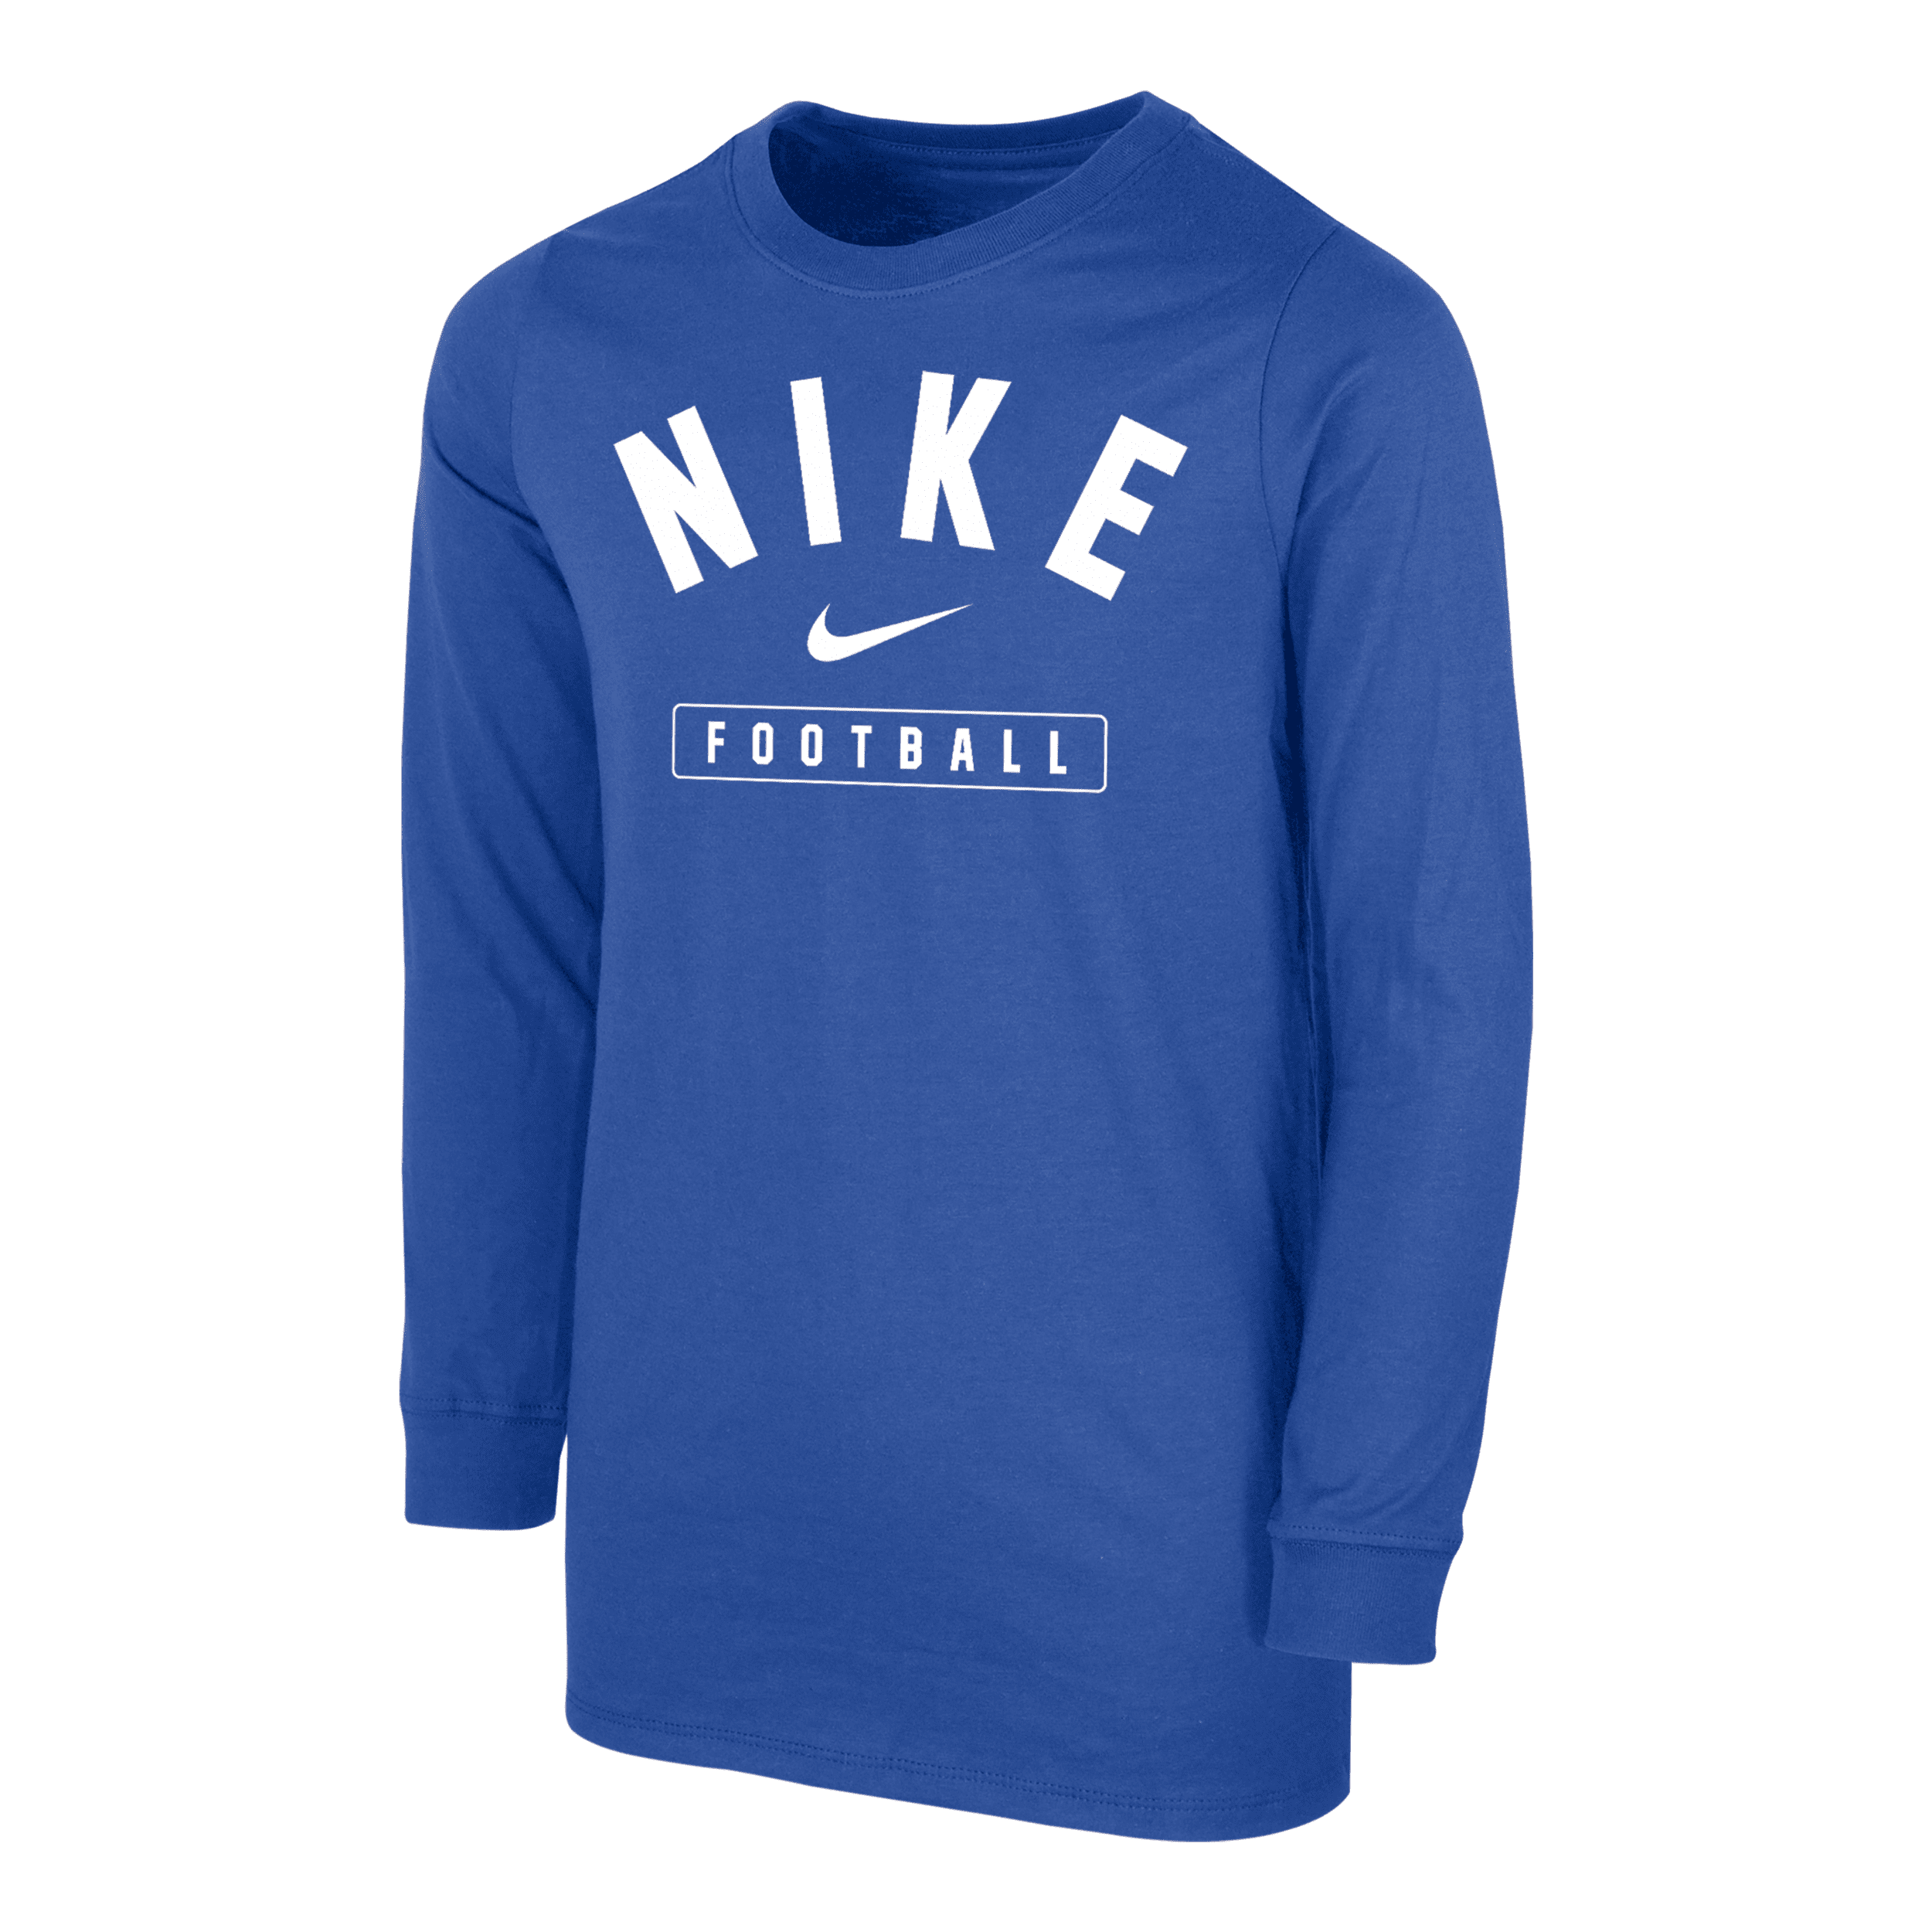 Nike Football Big Kids' (boys') Long-sleeve T-shirt In Blue